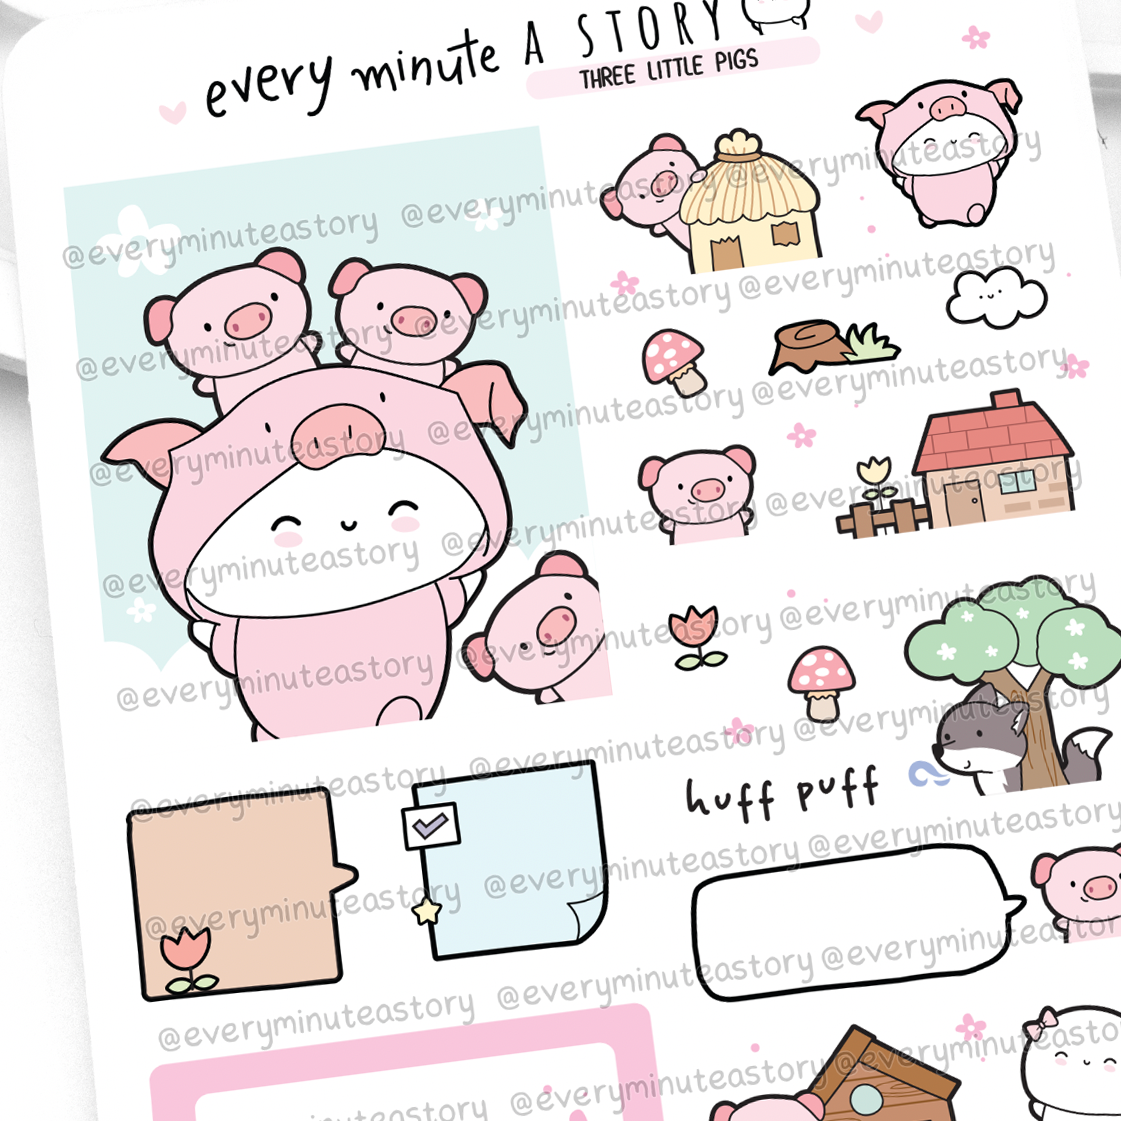 Three little pigs stickers